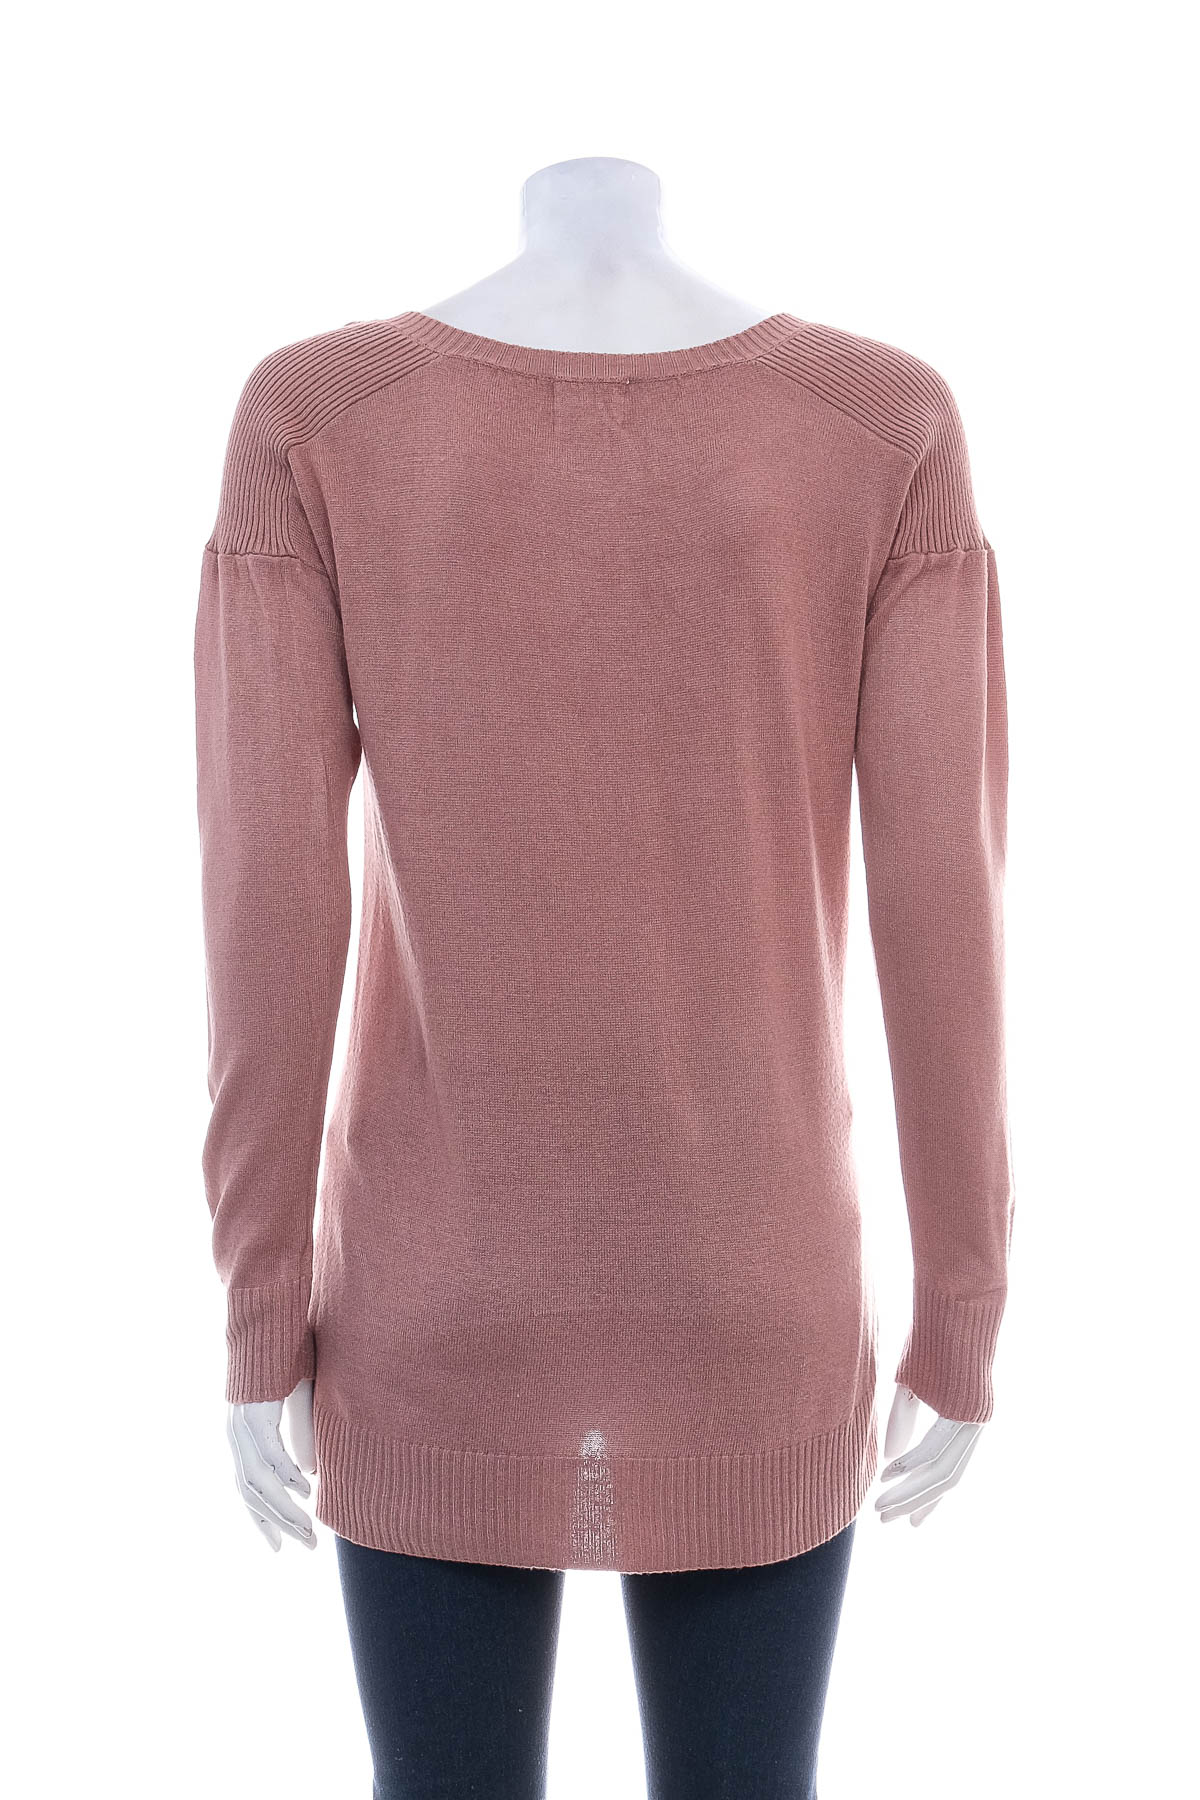 Women's sweater - HIPPIE ROSE - 1